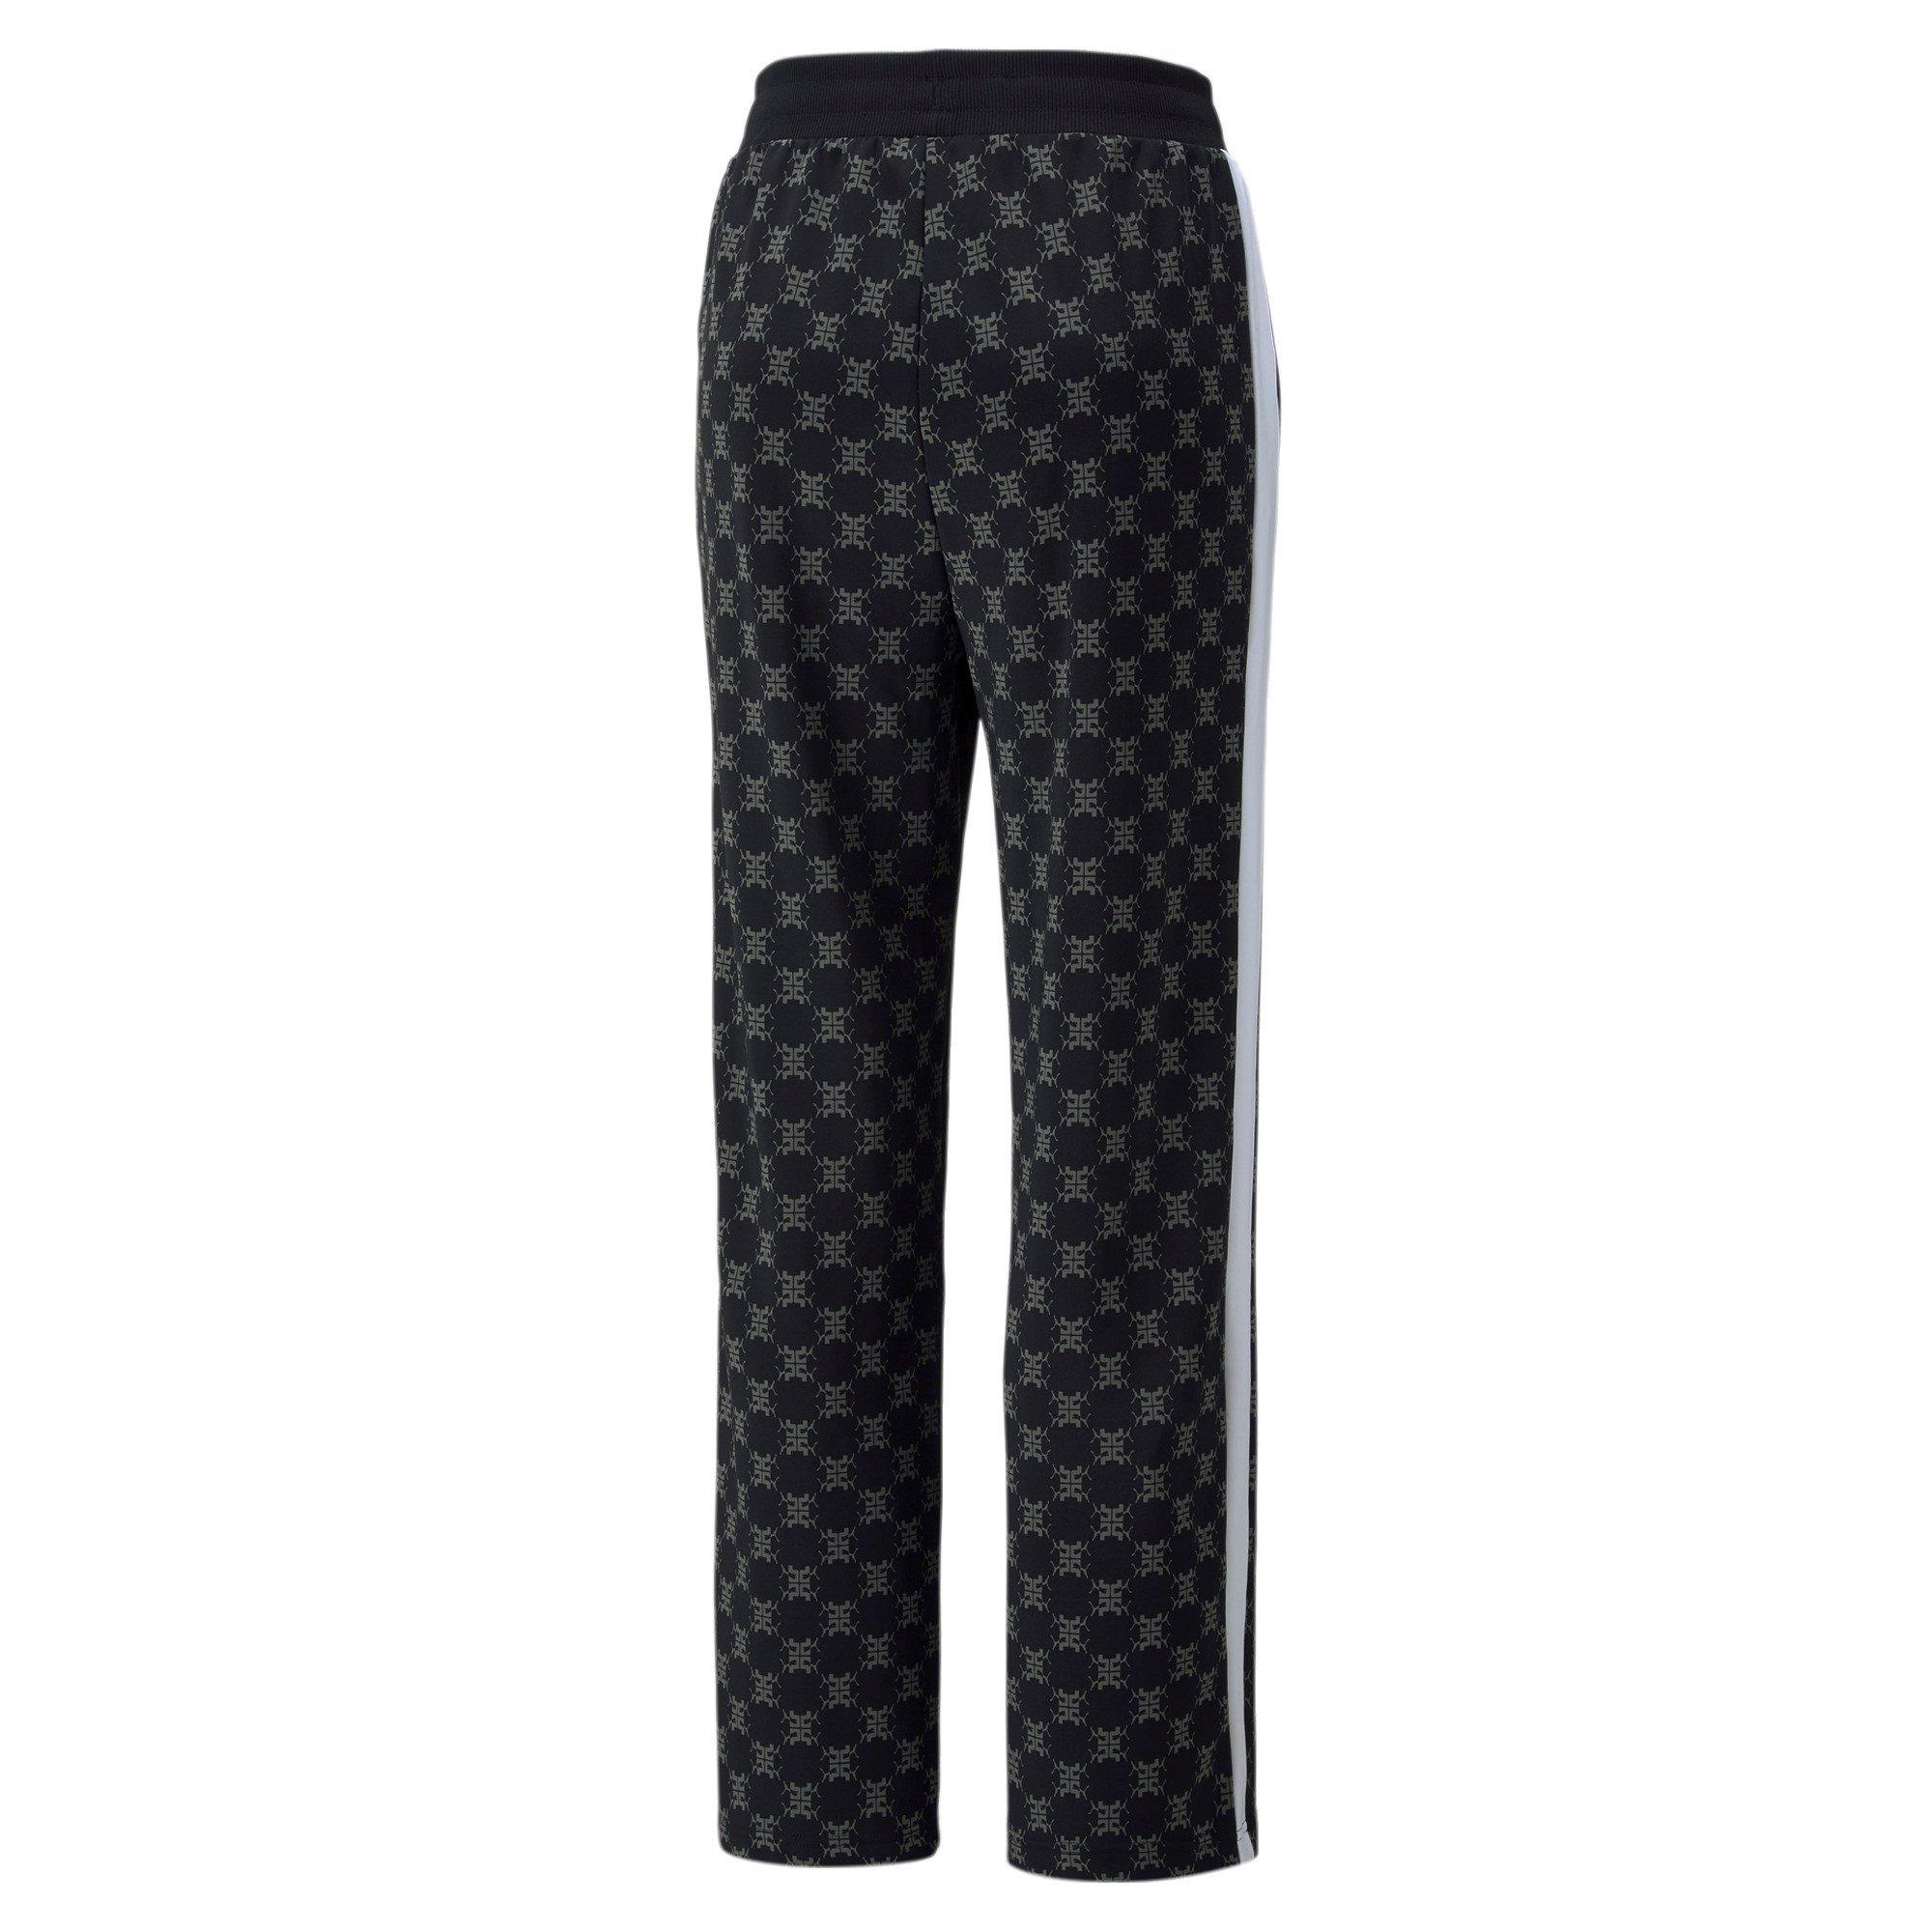 Louis Vuitton Monogram Track Pants BLACK. Size Xs